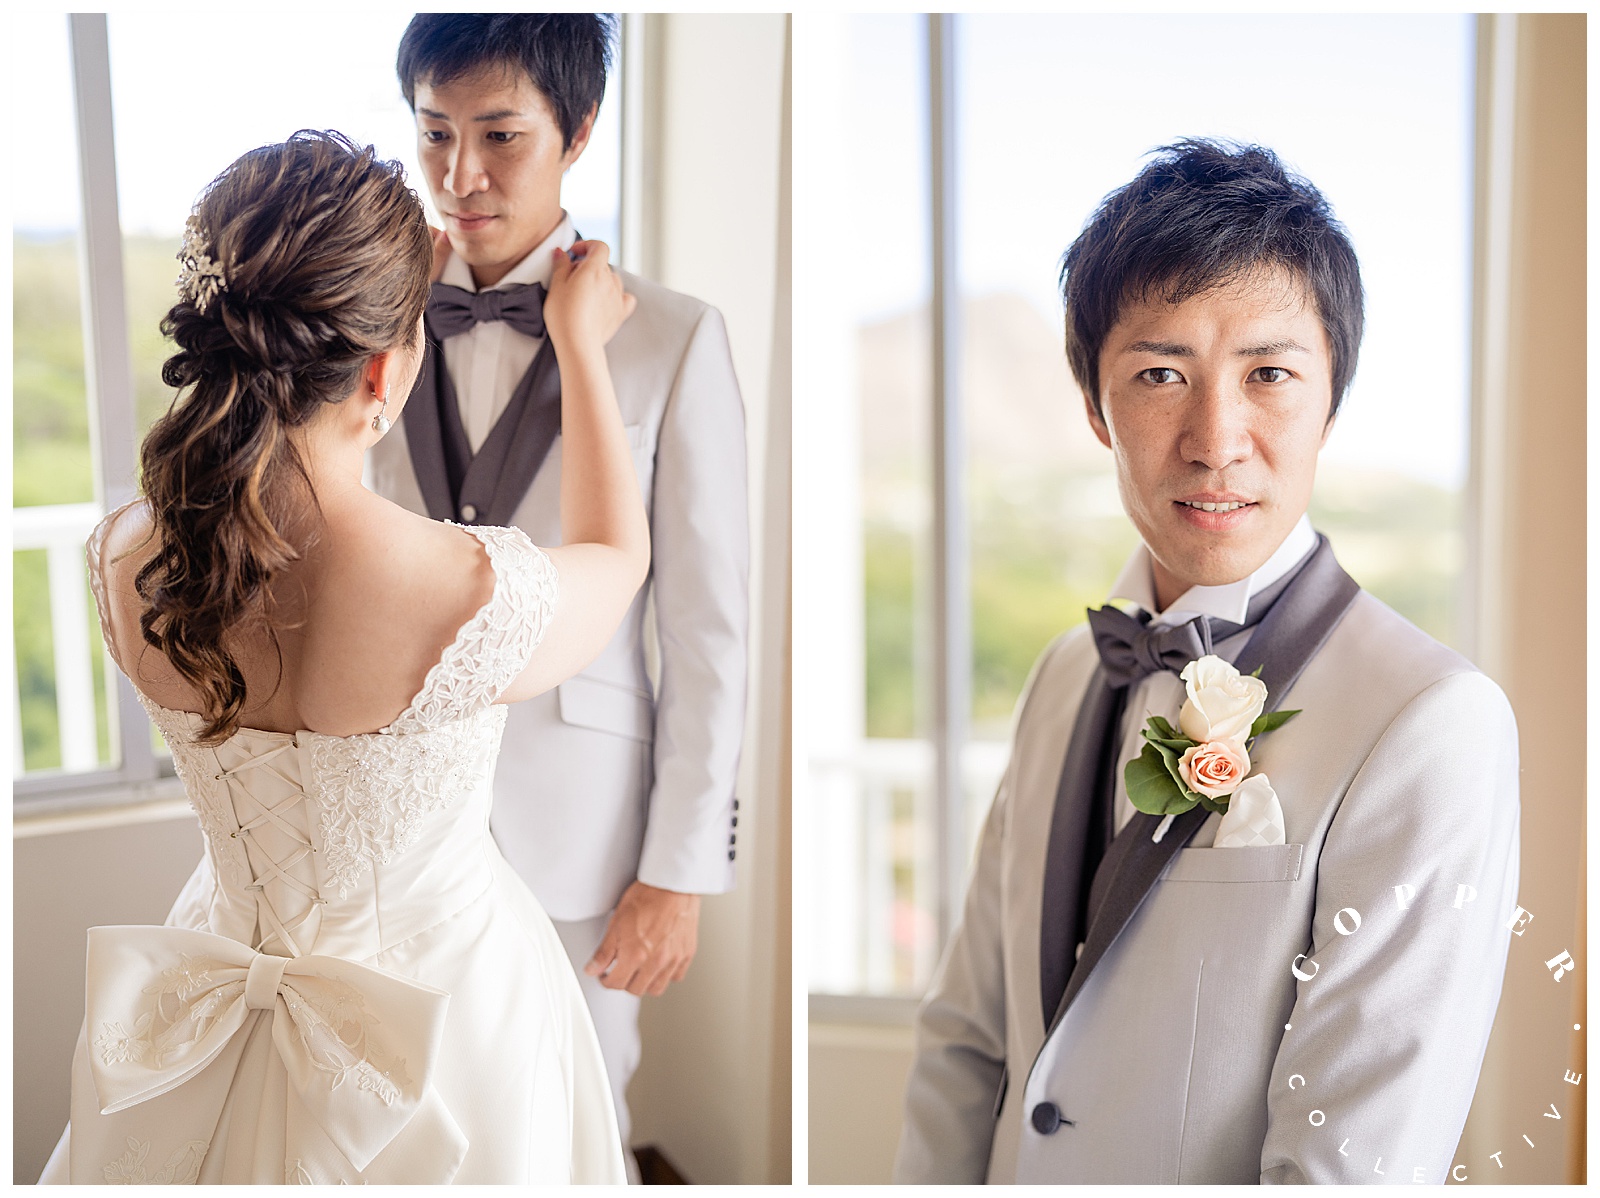 Japanese couple getting ready for wedding at Waikiki hotel